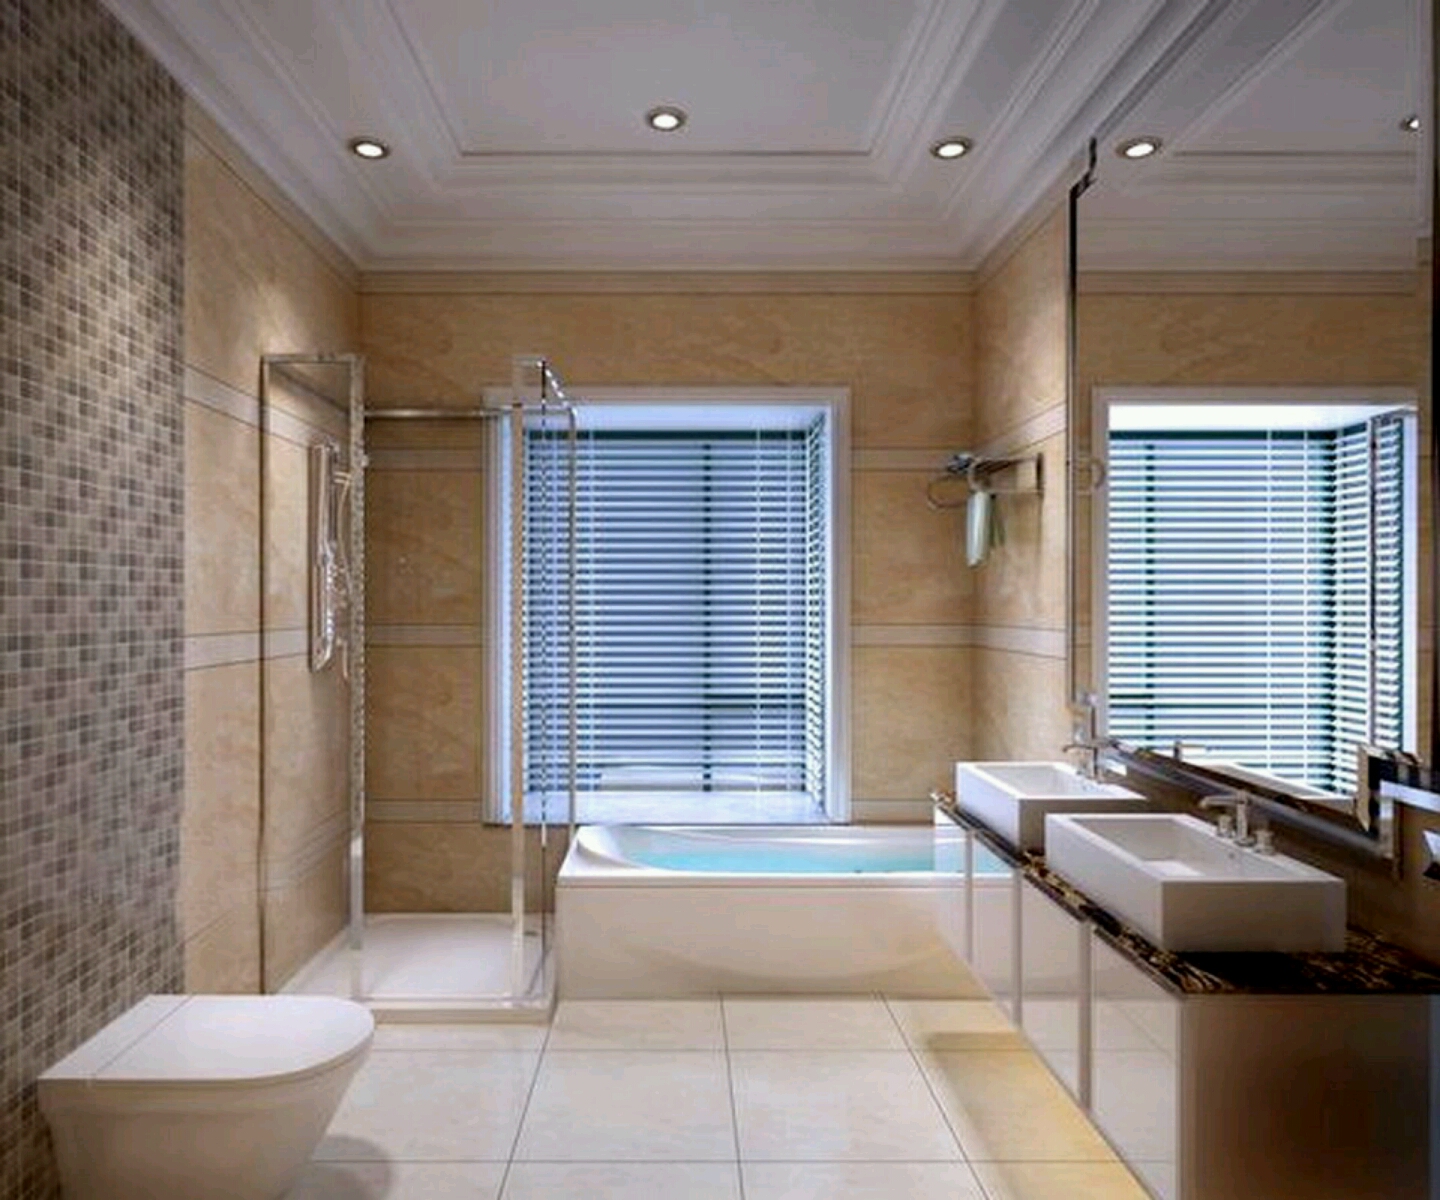 bathroom modern bathrooms designs tile floor interior contemporary popular floors luxury stylish tags retro godfatherstyle